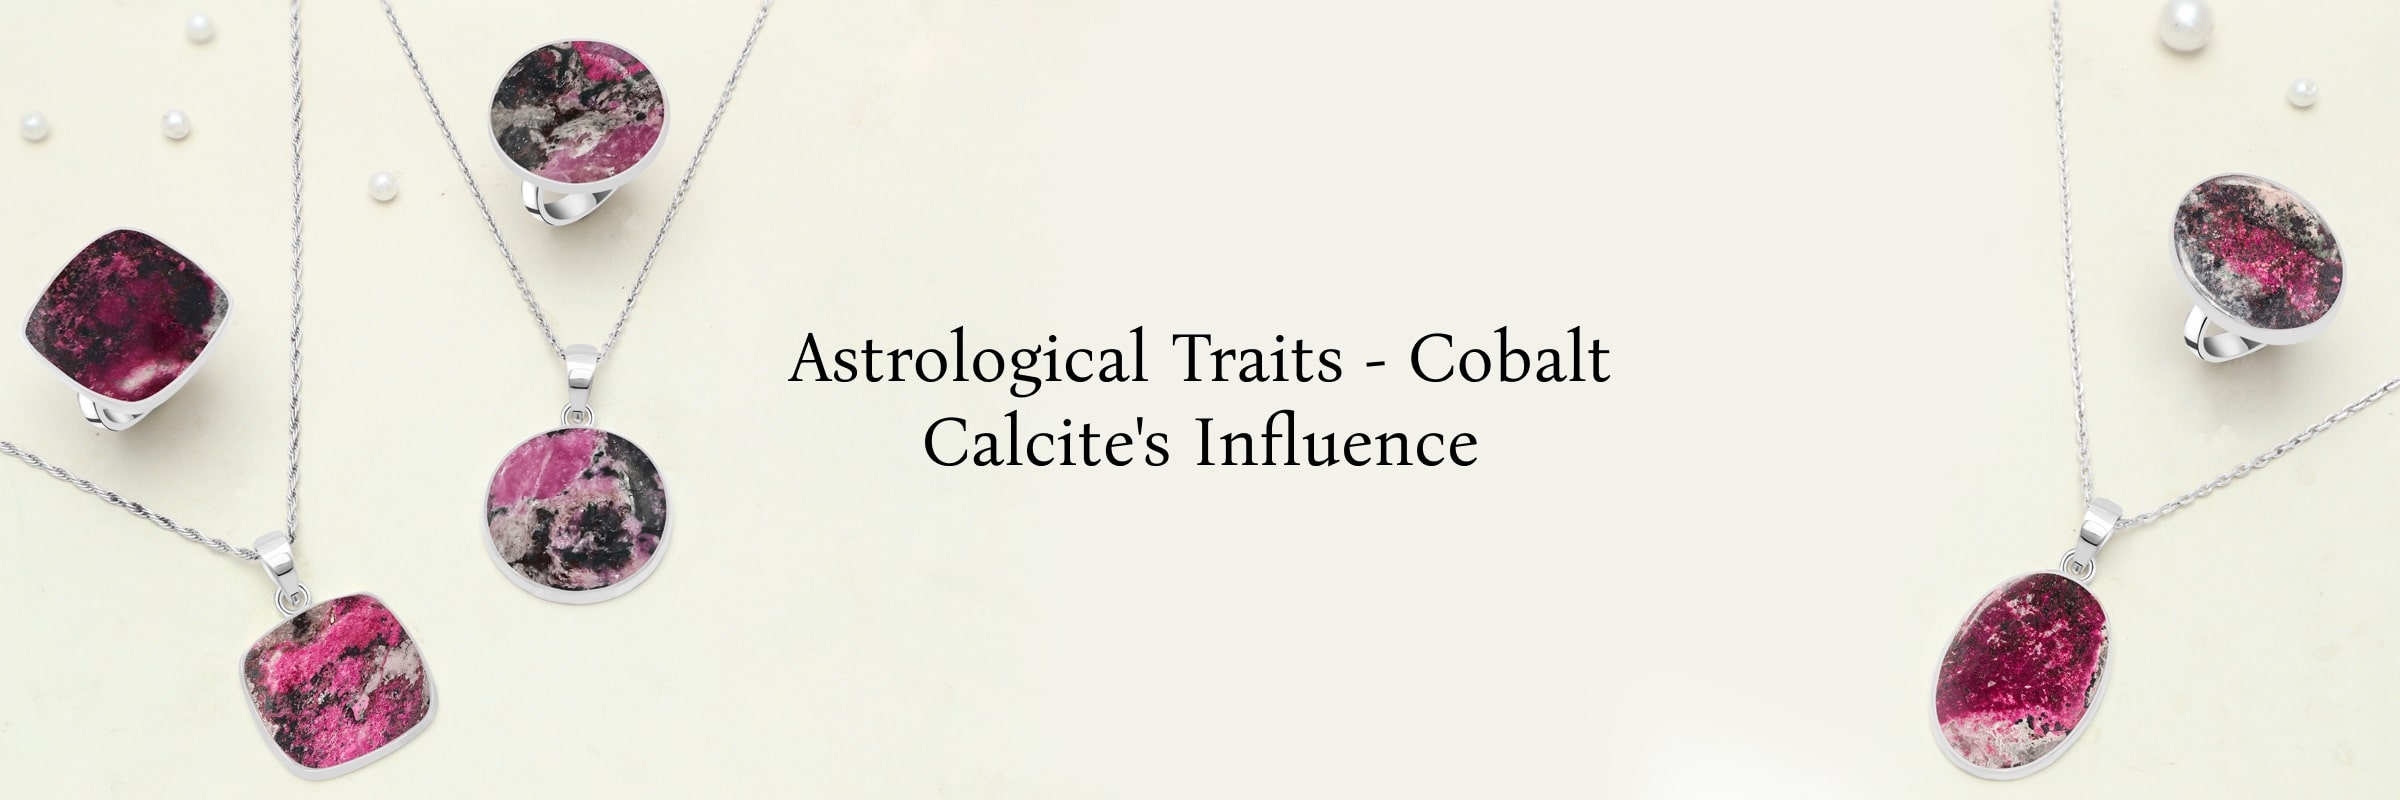 Cobalt Calcite Zodiac Properties